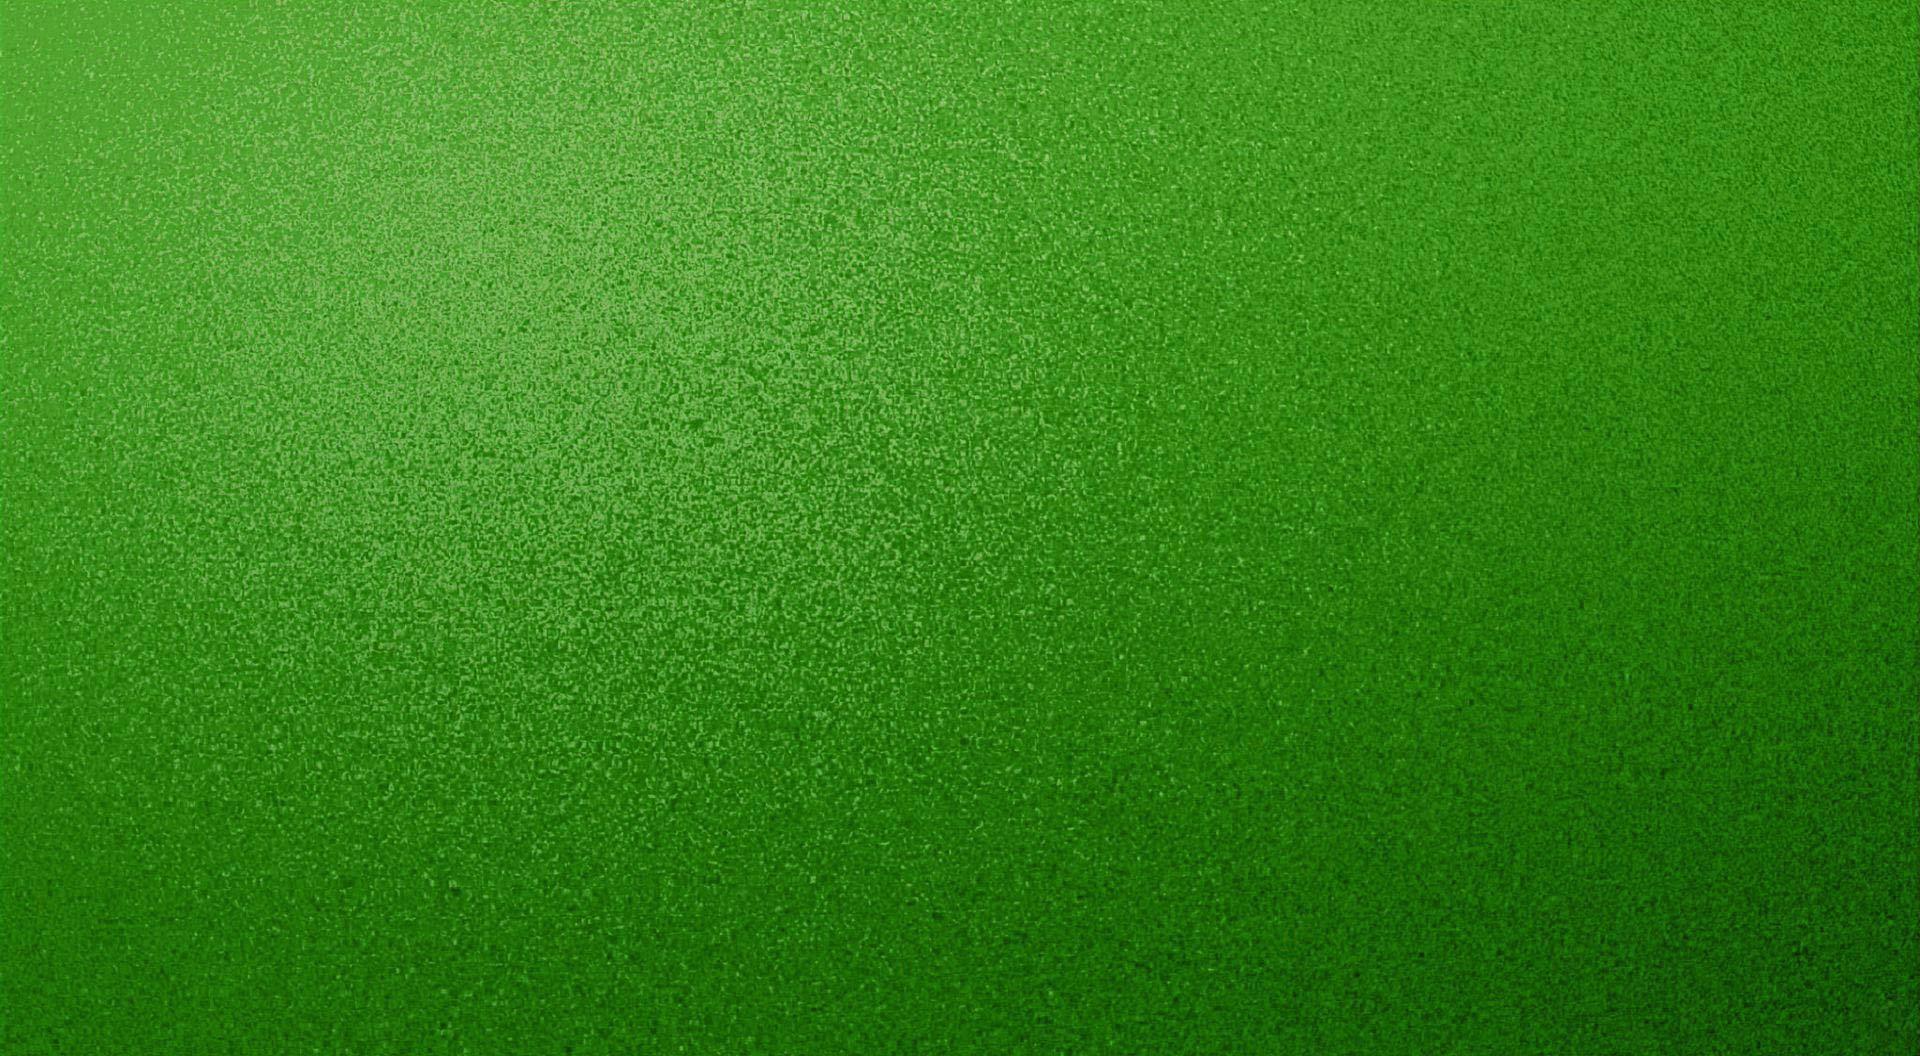 green background. Green textured speckled desktop background